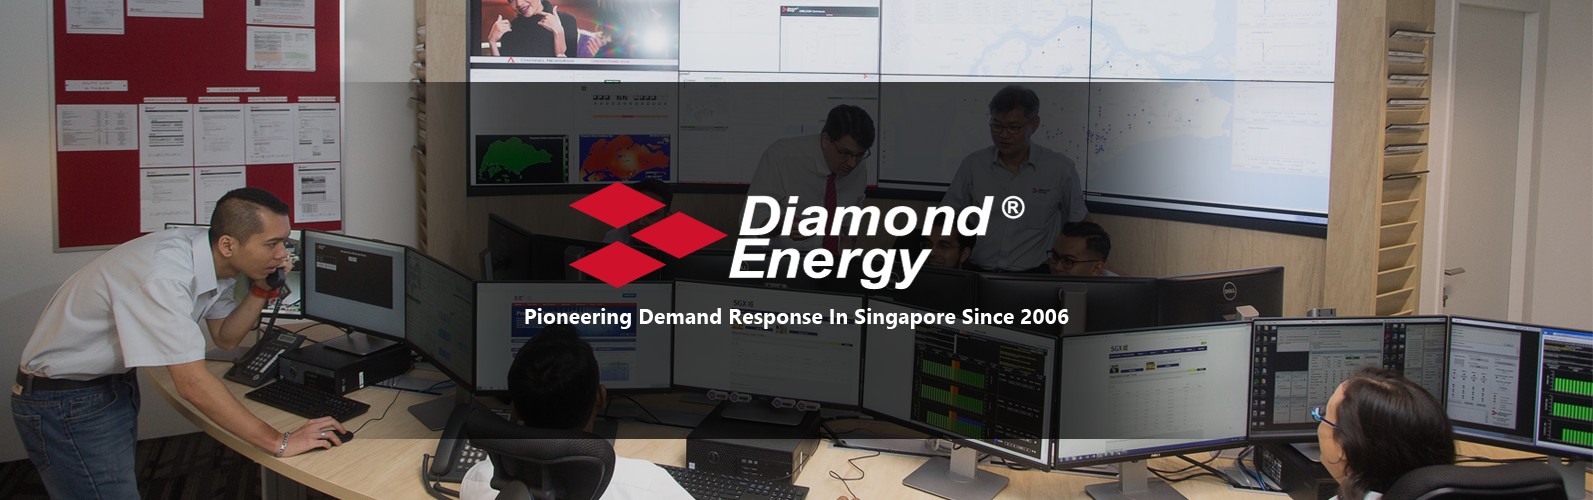 Diamond Energy Corporation Linkedin